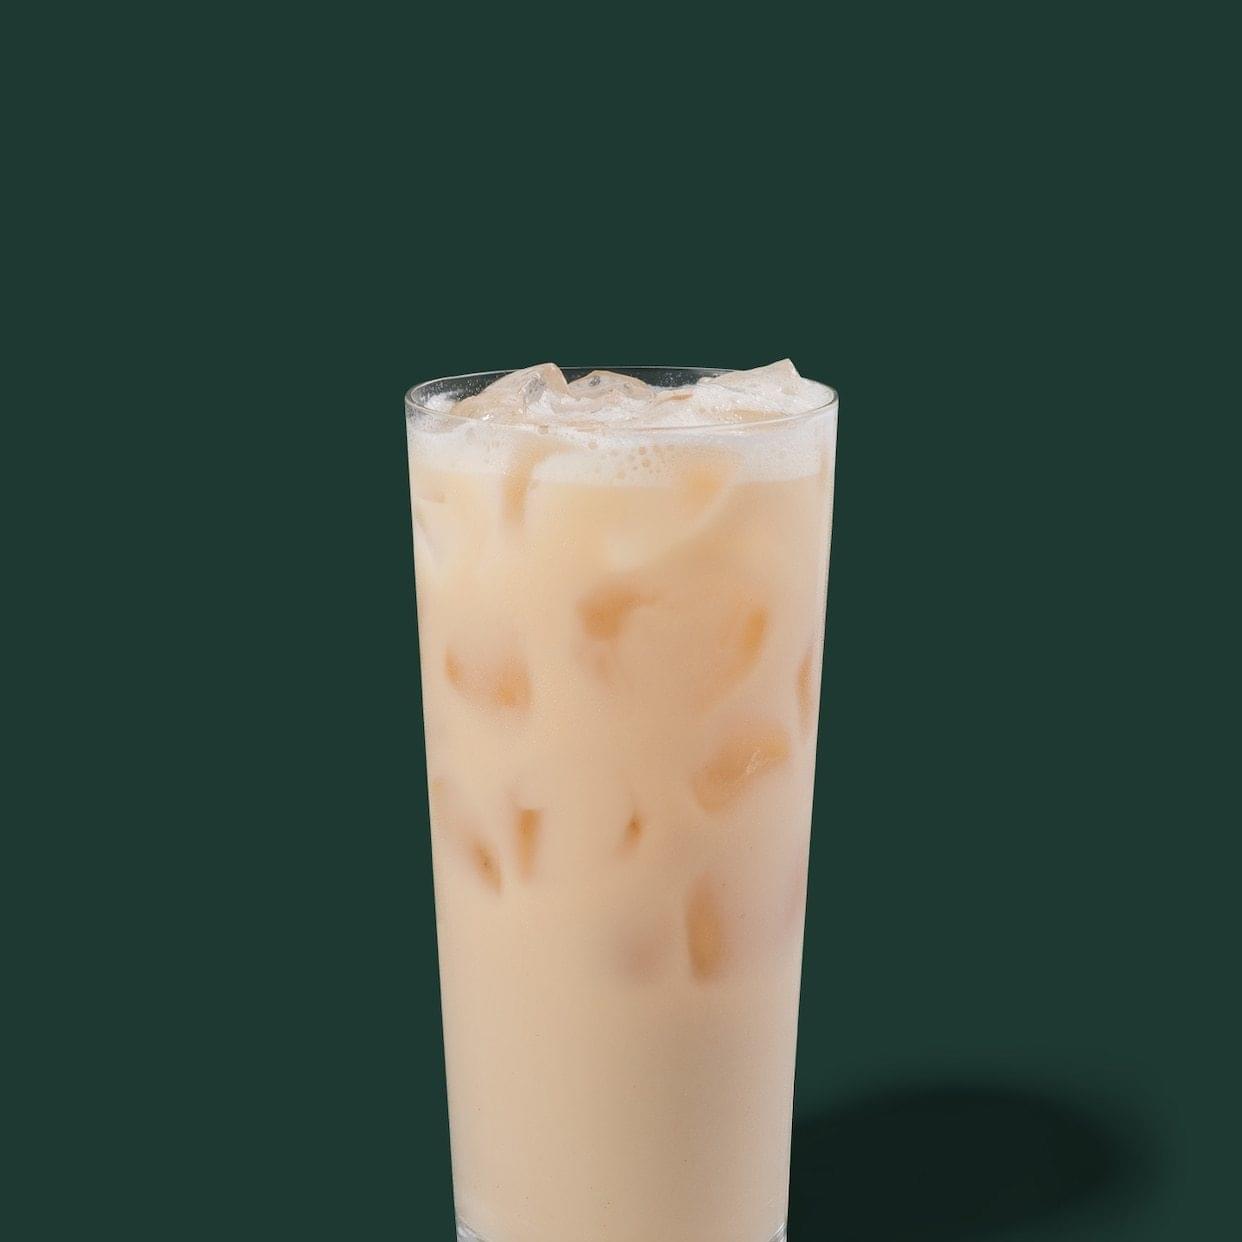 Starbucks Venti Iced London Fog Tea Latte Nutrition Facts